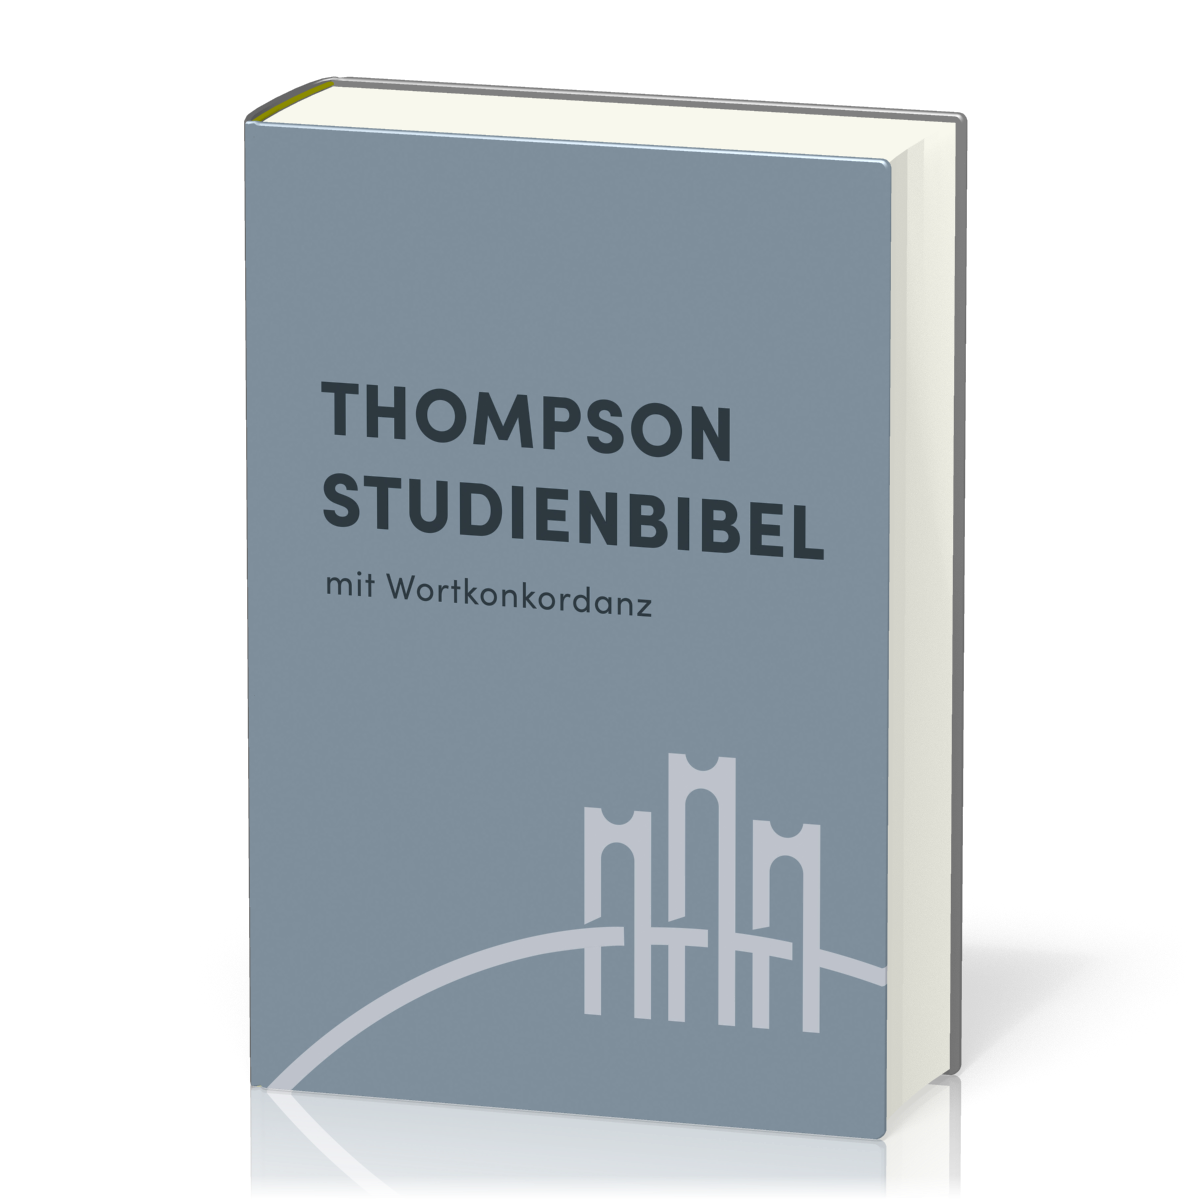 Thompson Studienbibel mit Wortkonkordanz (Hardcover)